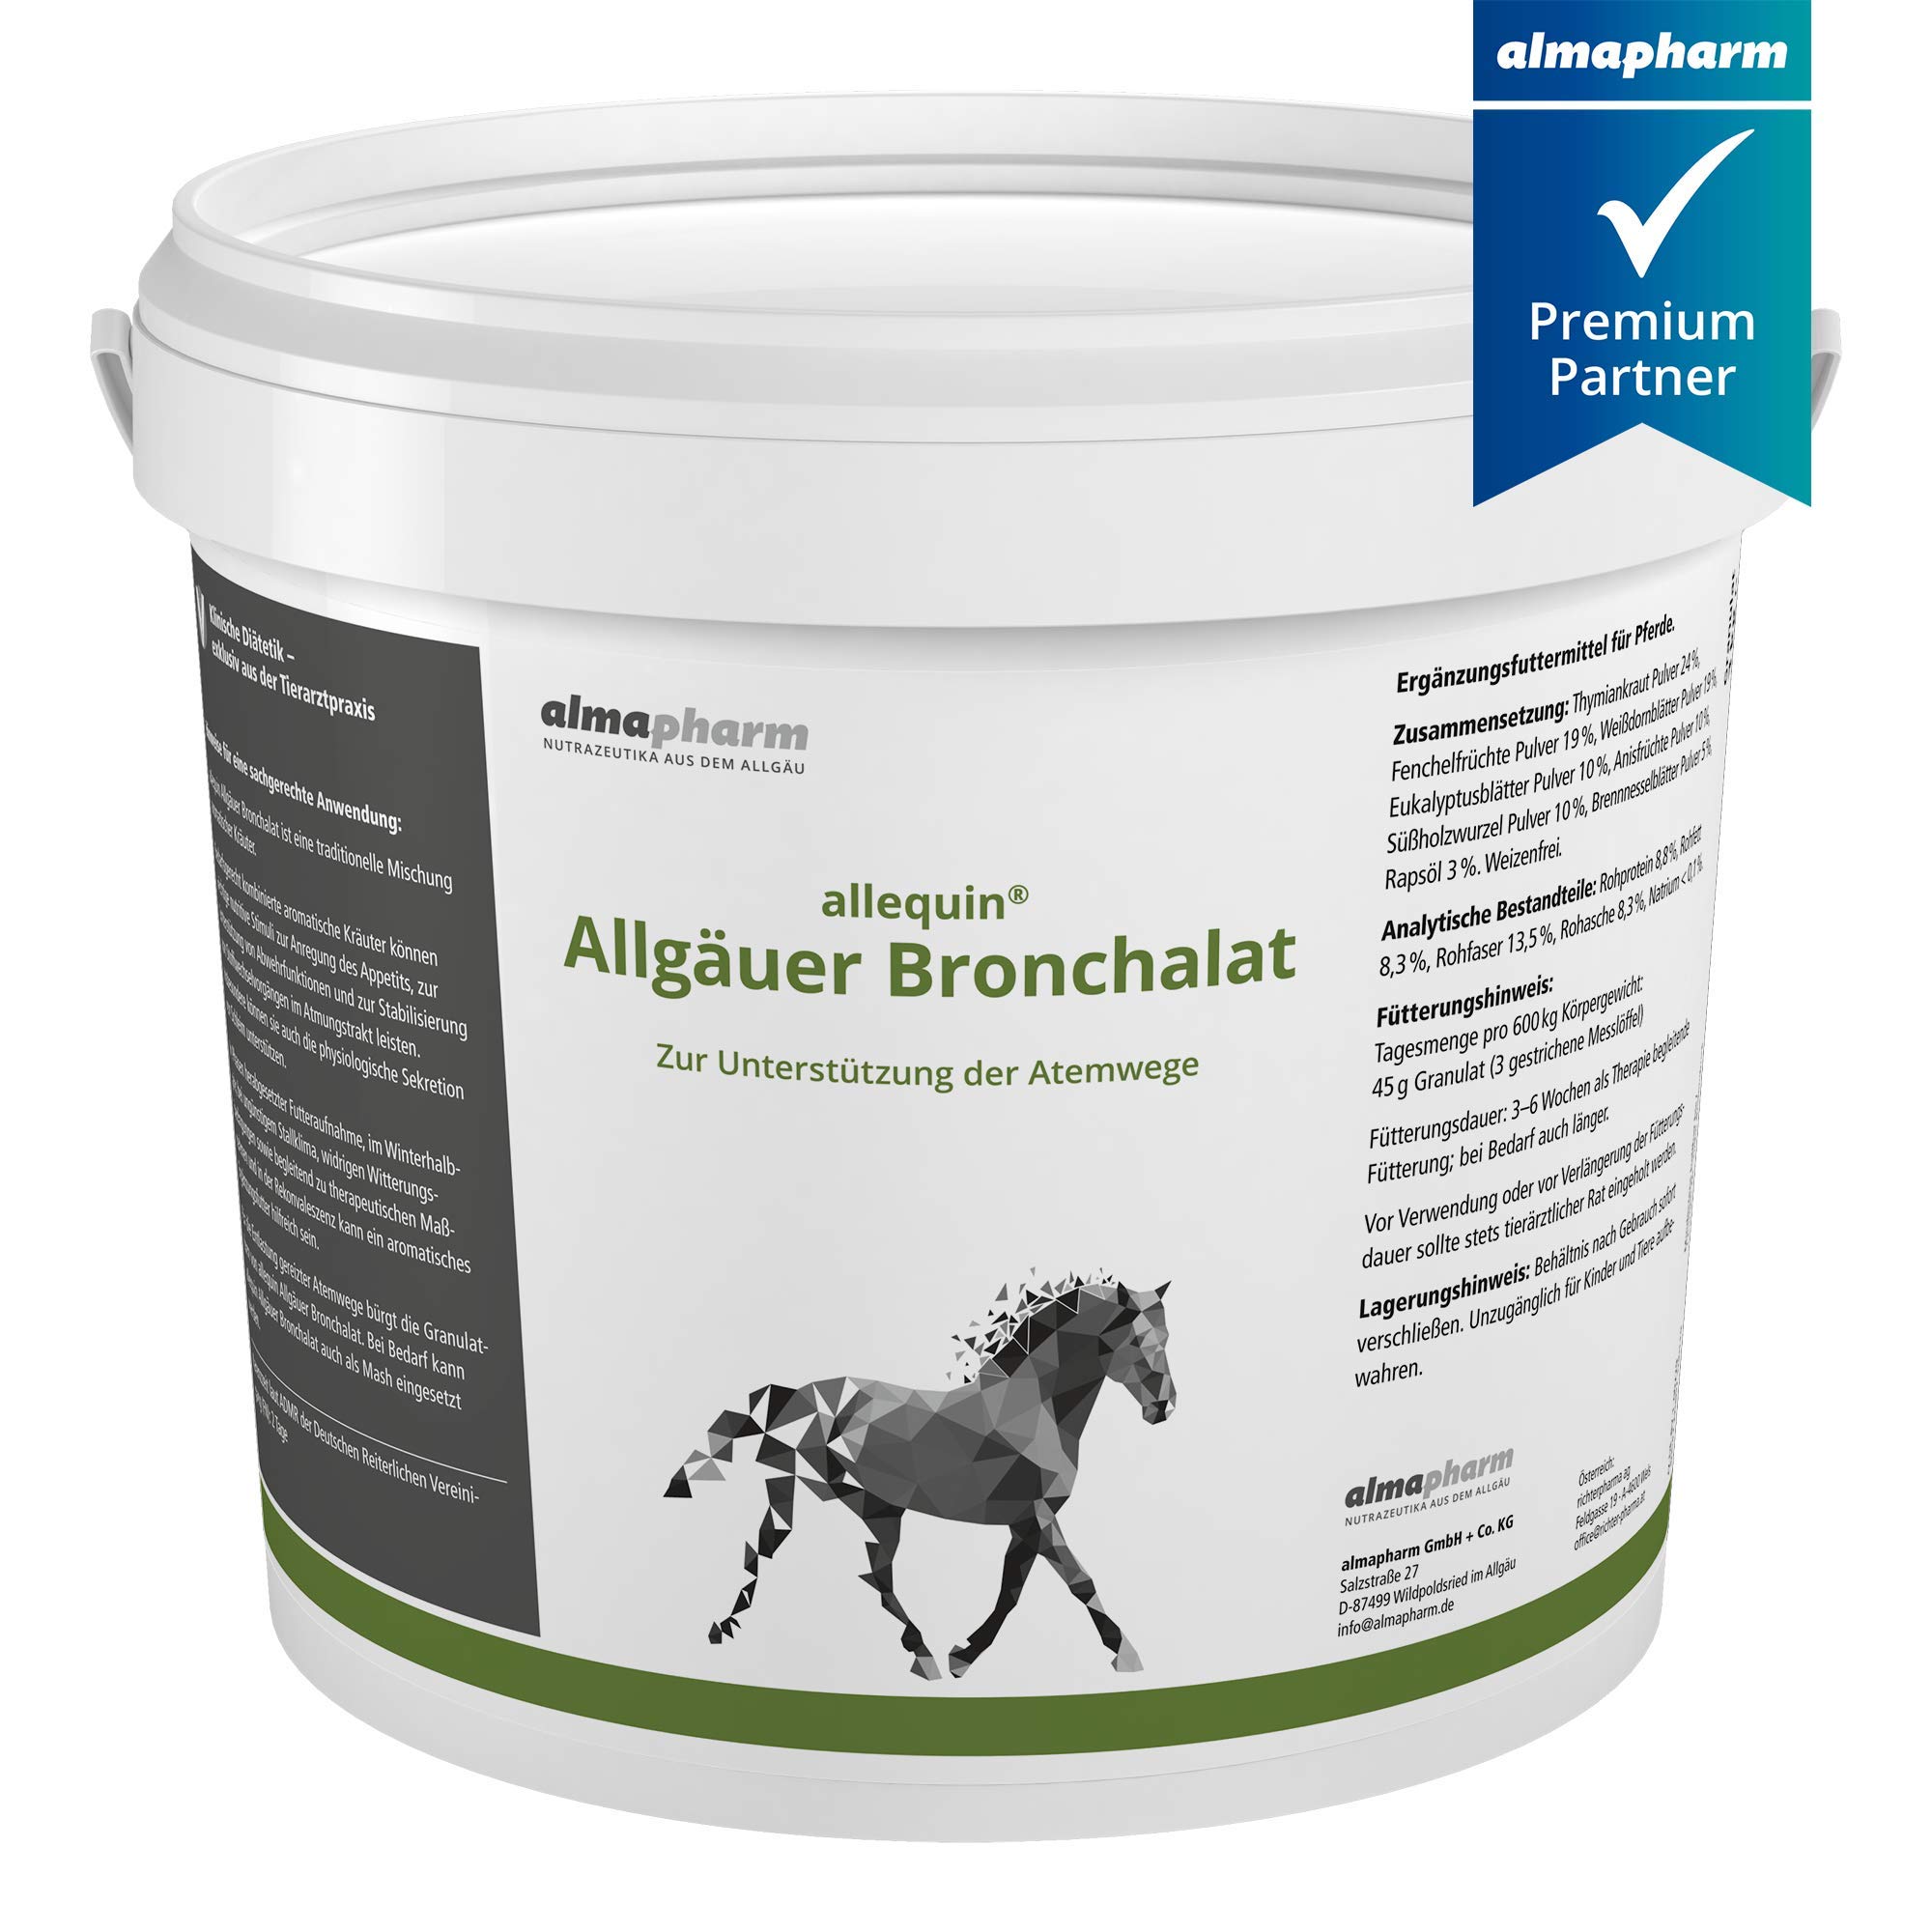 Almapharm allequin Allgäuer Bronchalat, Option:3 kg